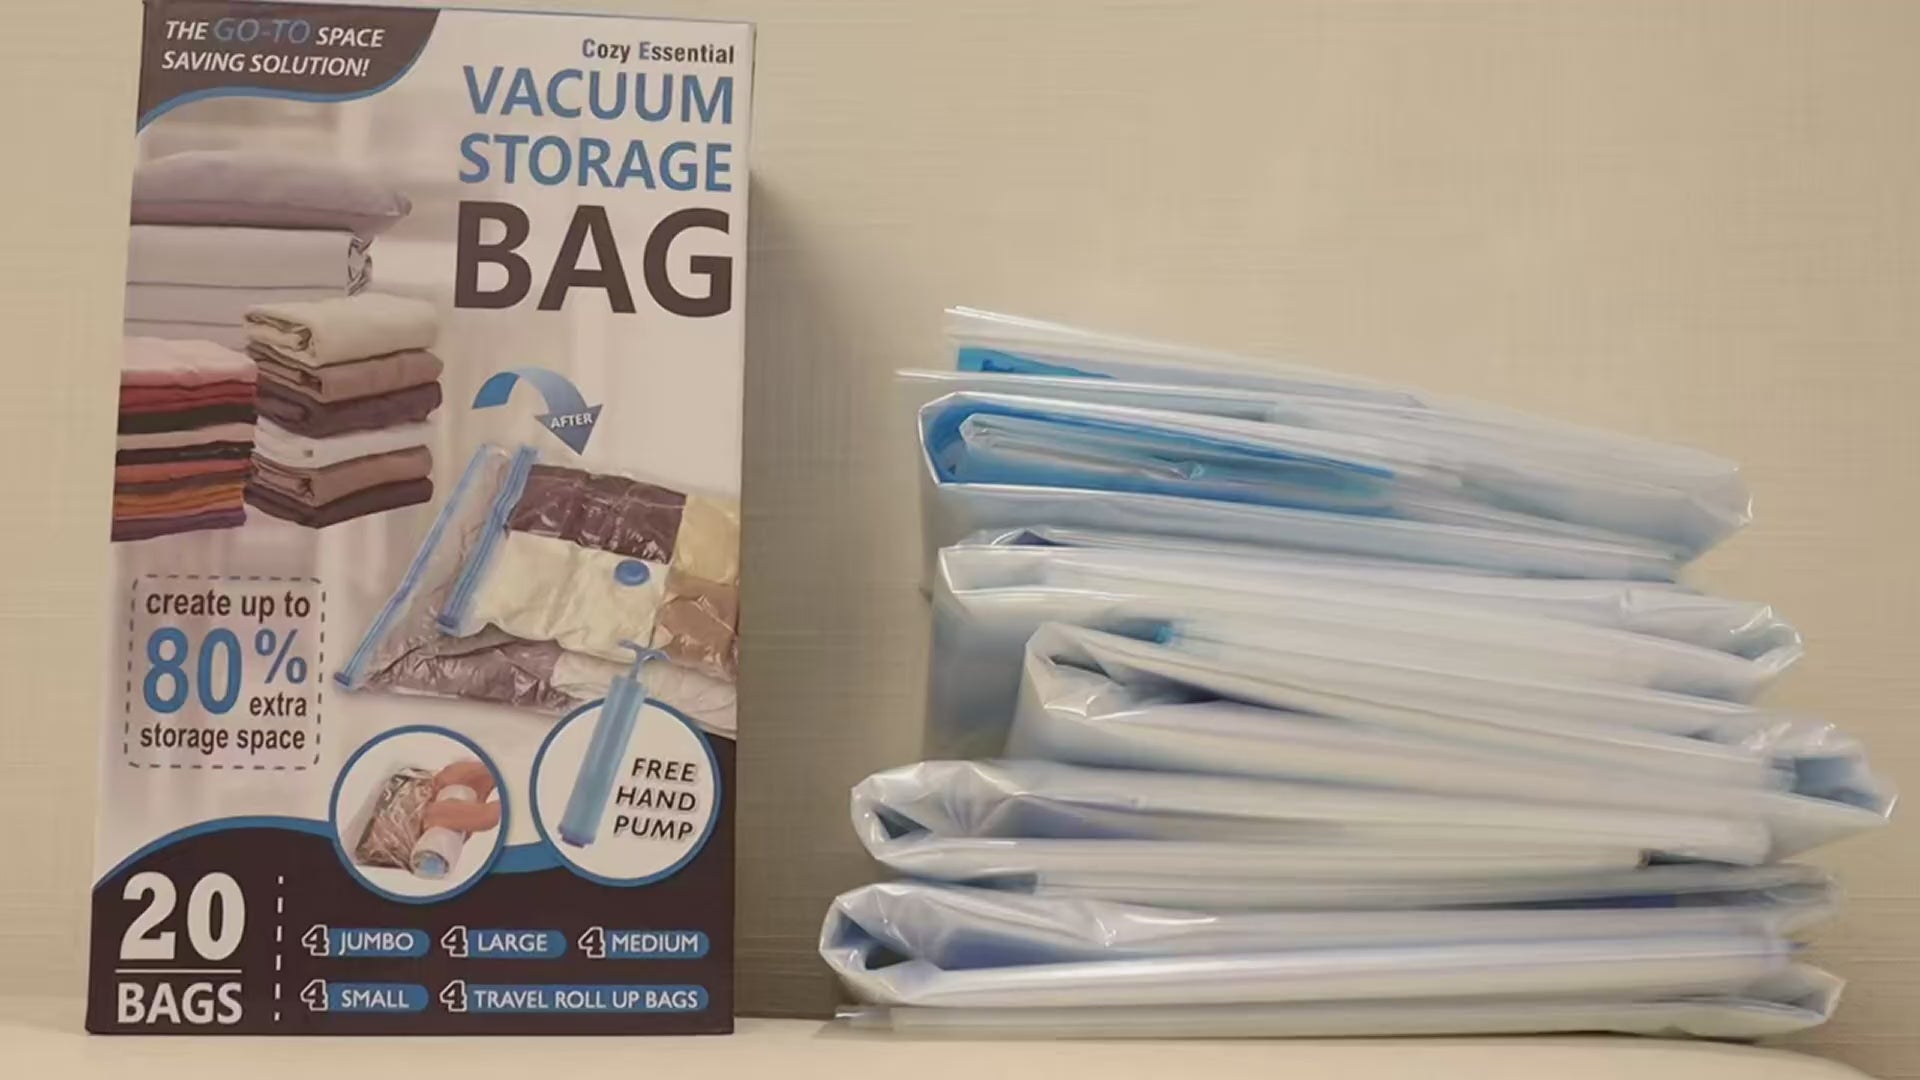 Vacuum Storage Bags, Hand Pump Included